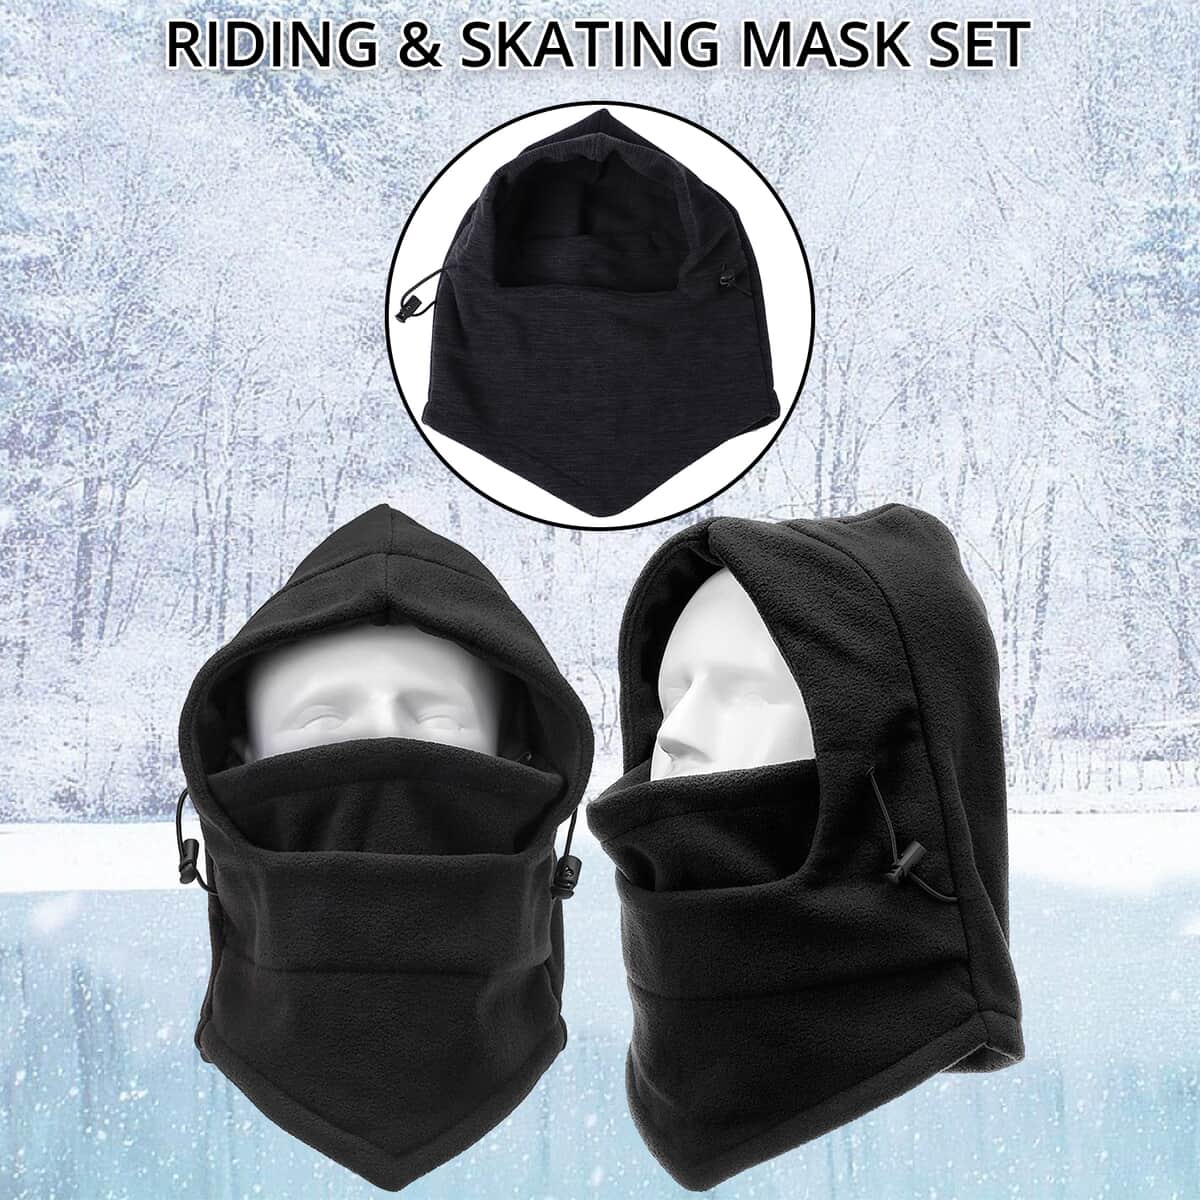 Set of 2 Black Windproof Riding and Skating Mask image number 1